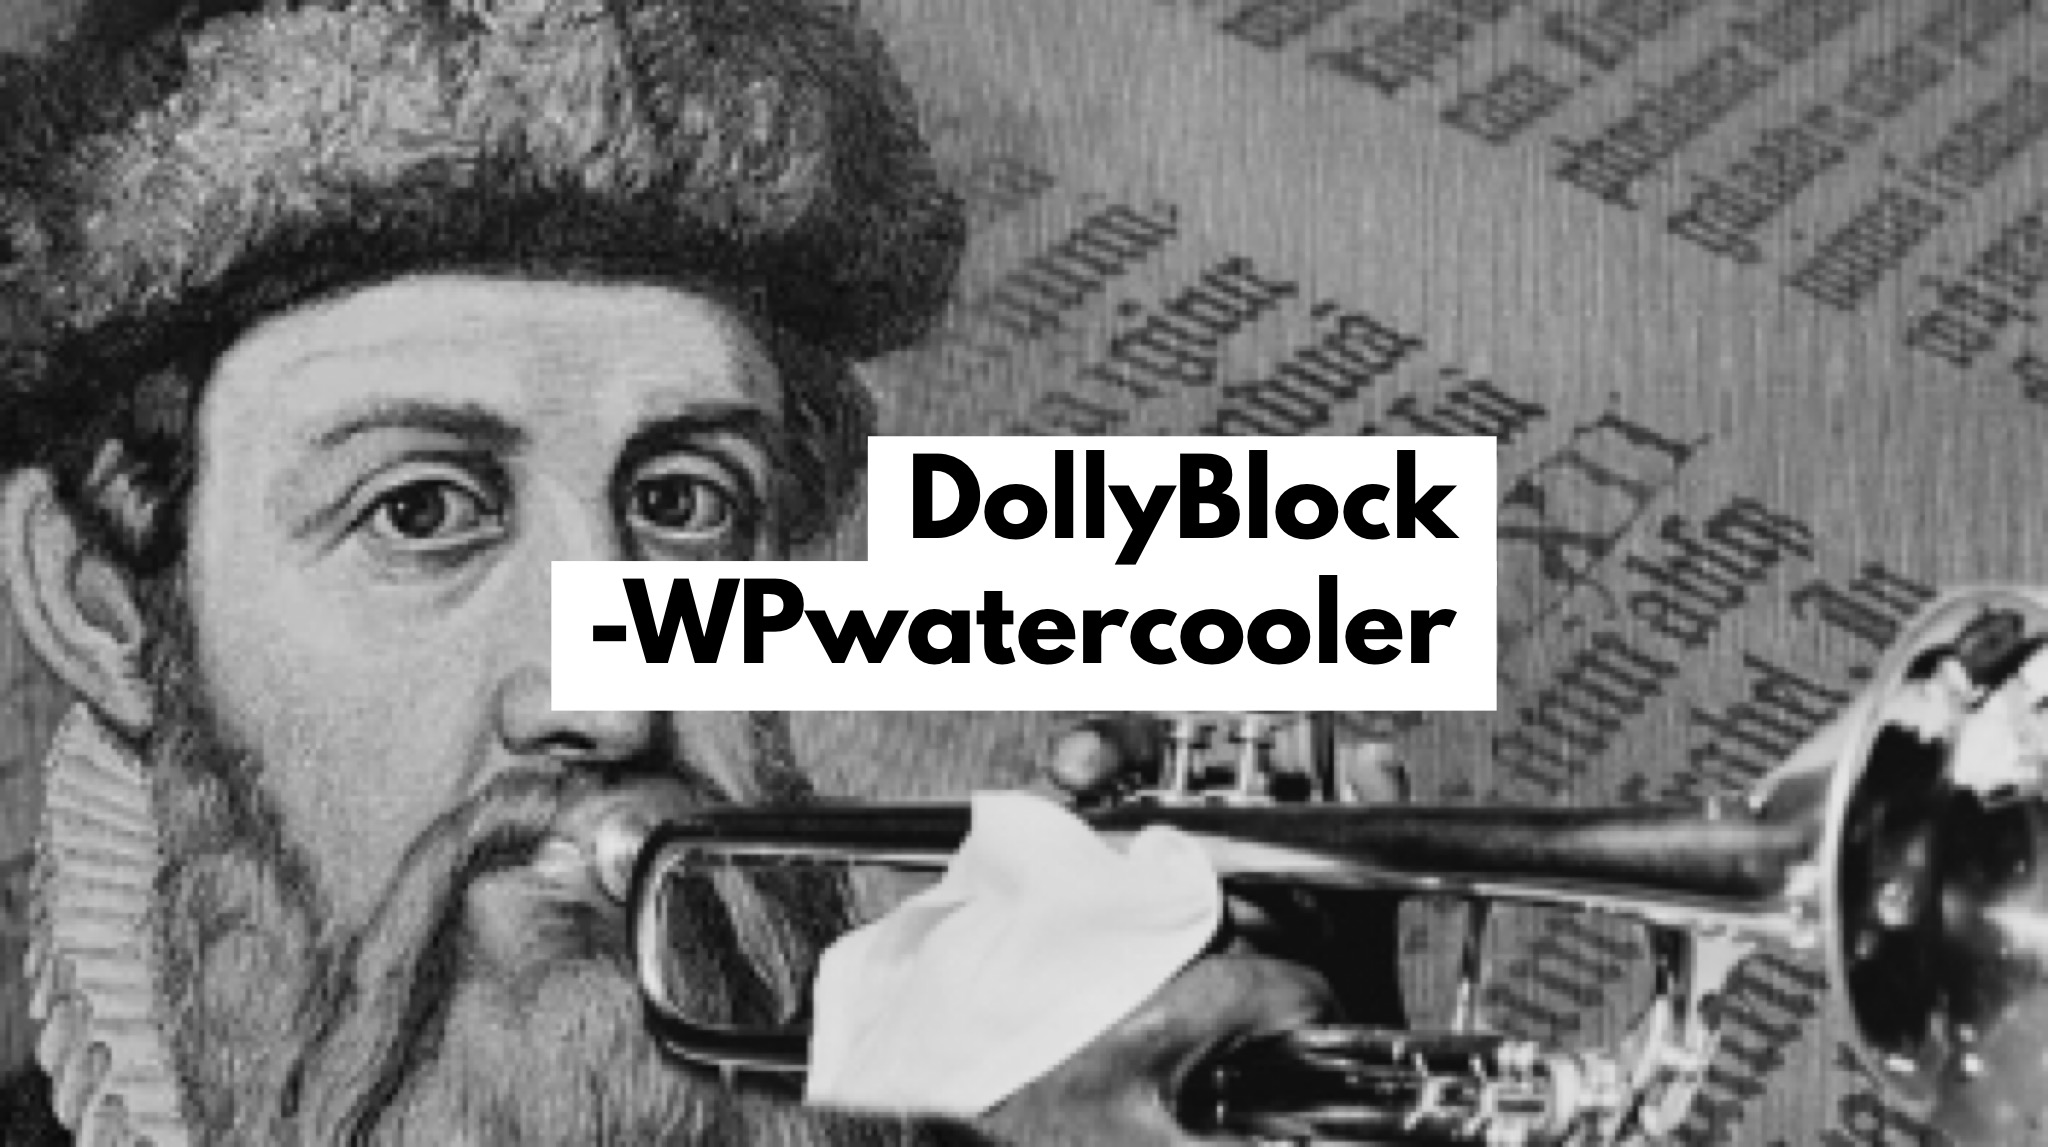 WPwatercooler EP297 – DollyBlock